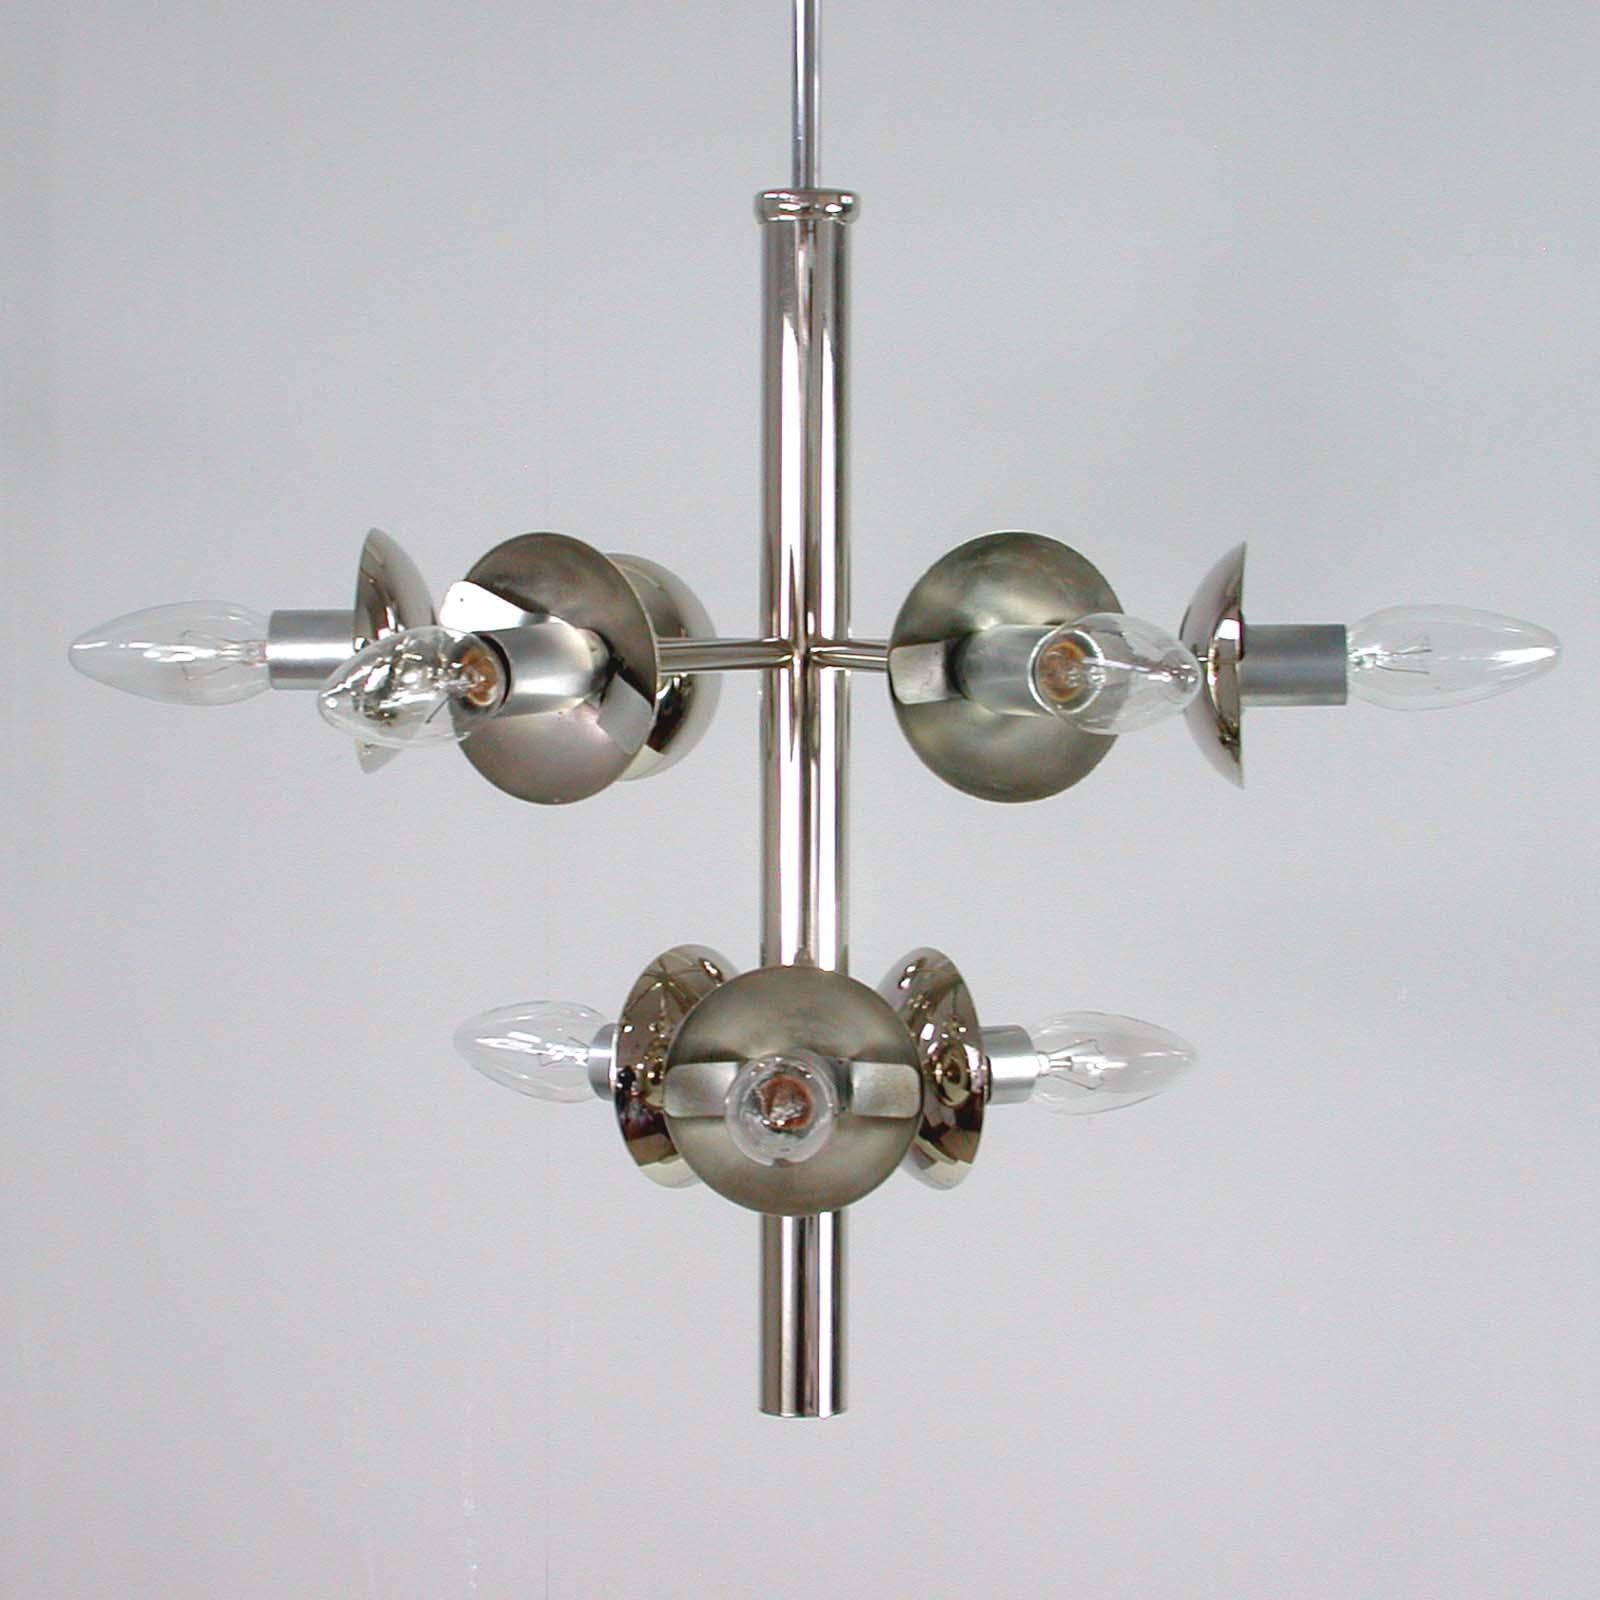 German Midcentury Atomic Sputnik Space Age Chrome Opaline Nine-Light Chandelier, 1960s For Sale